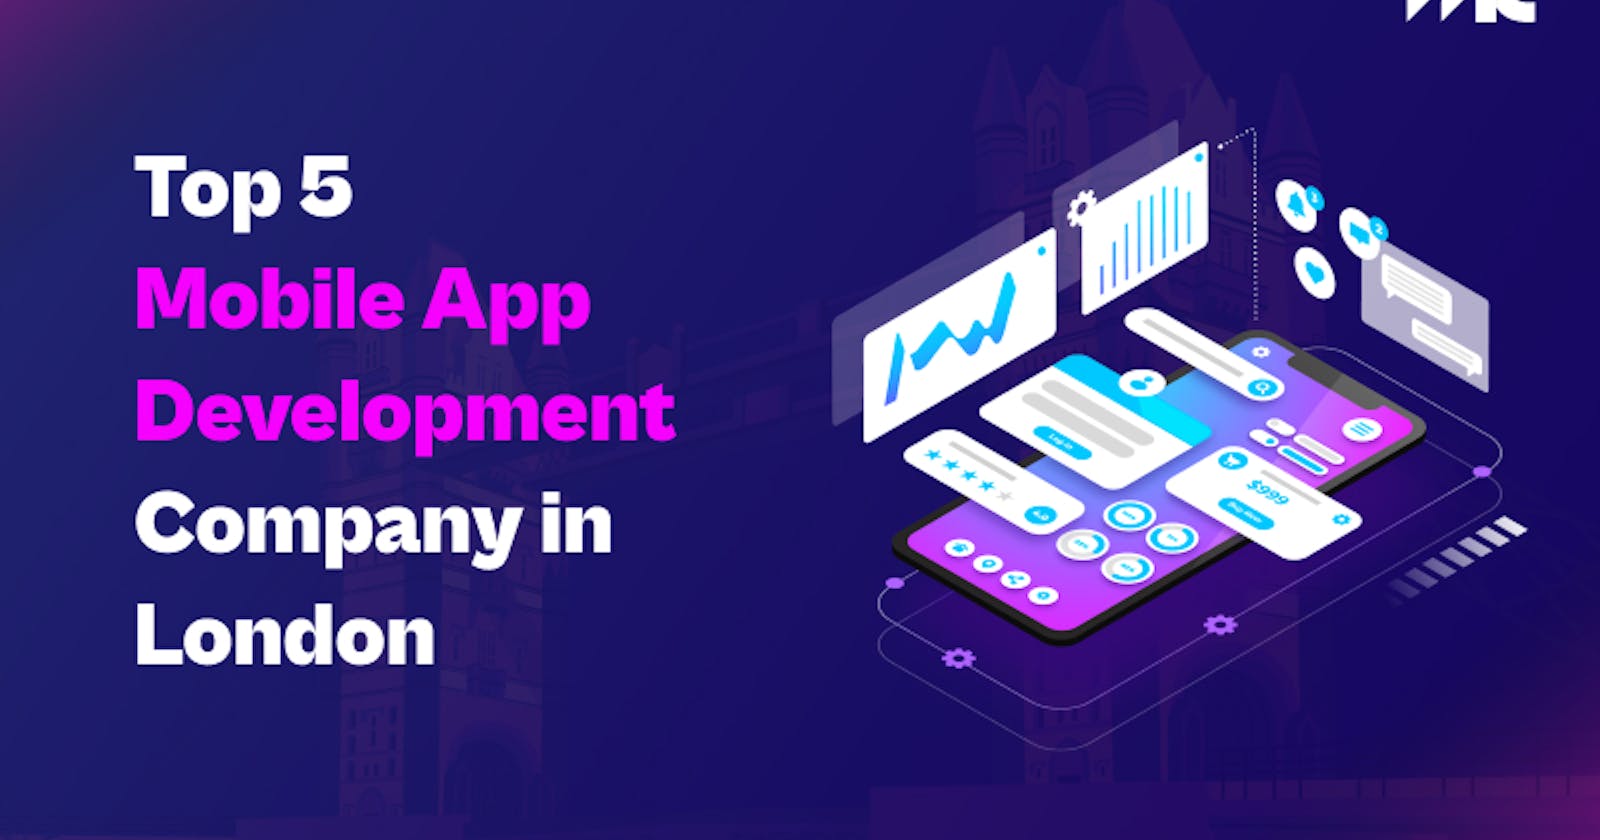 Top 5 Mobile App Development Company in London